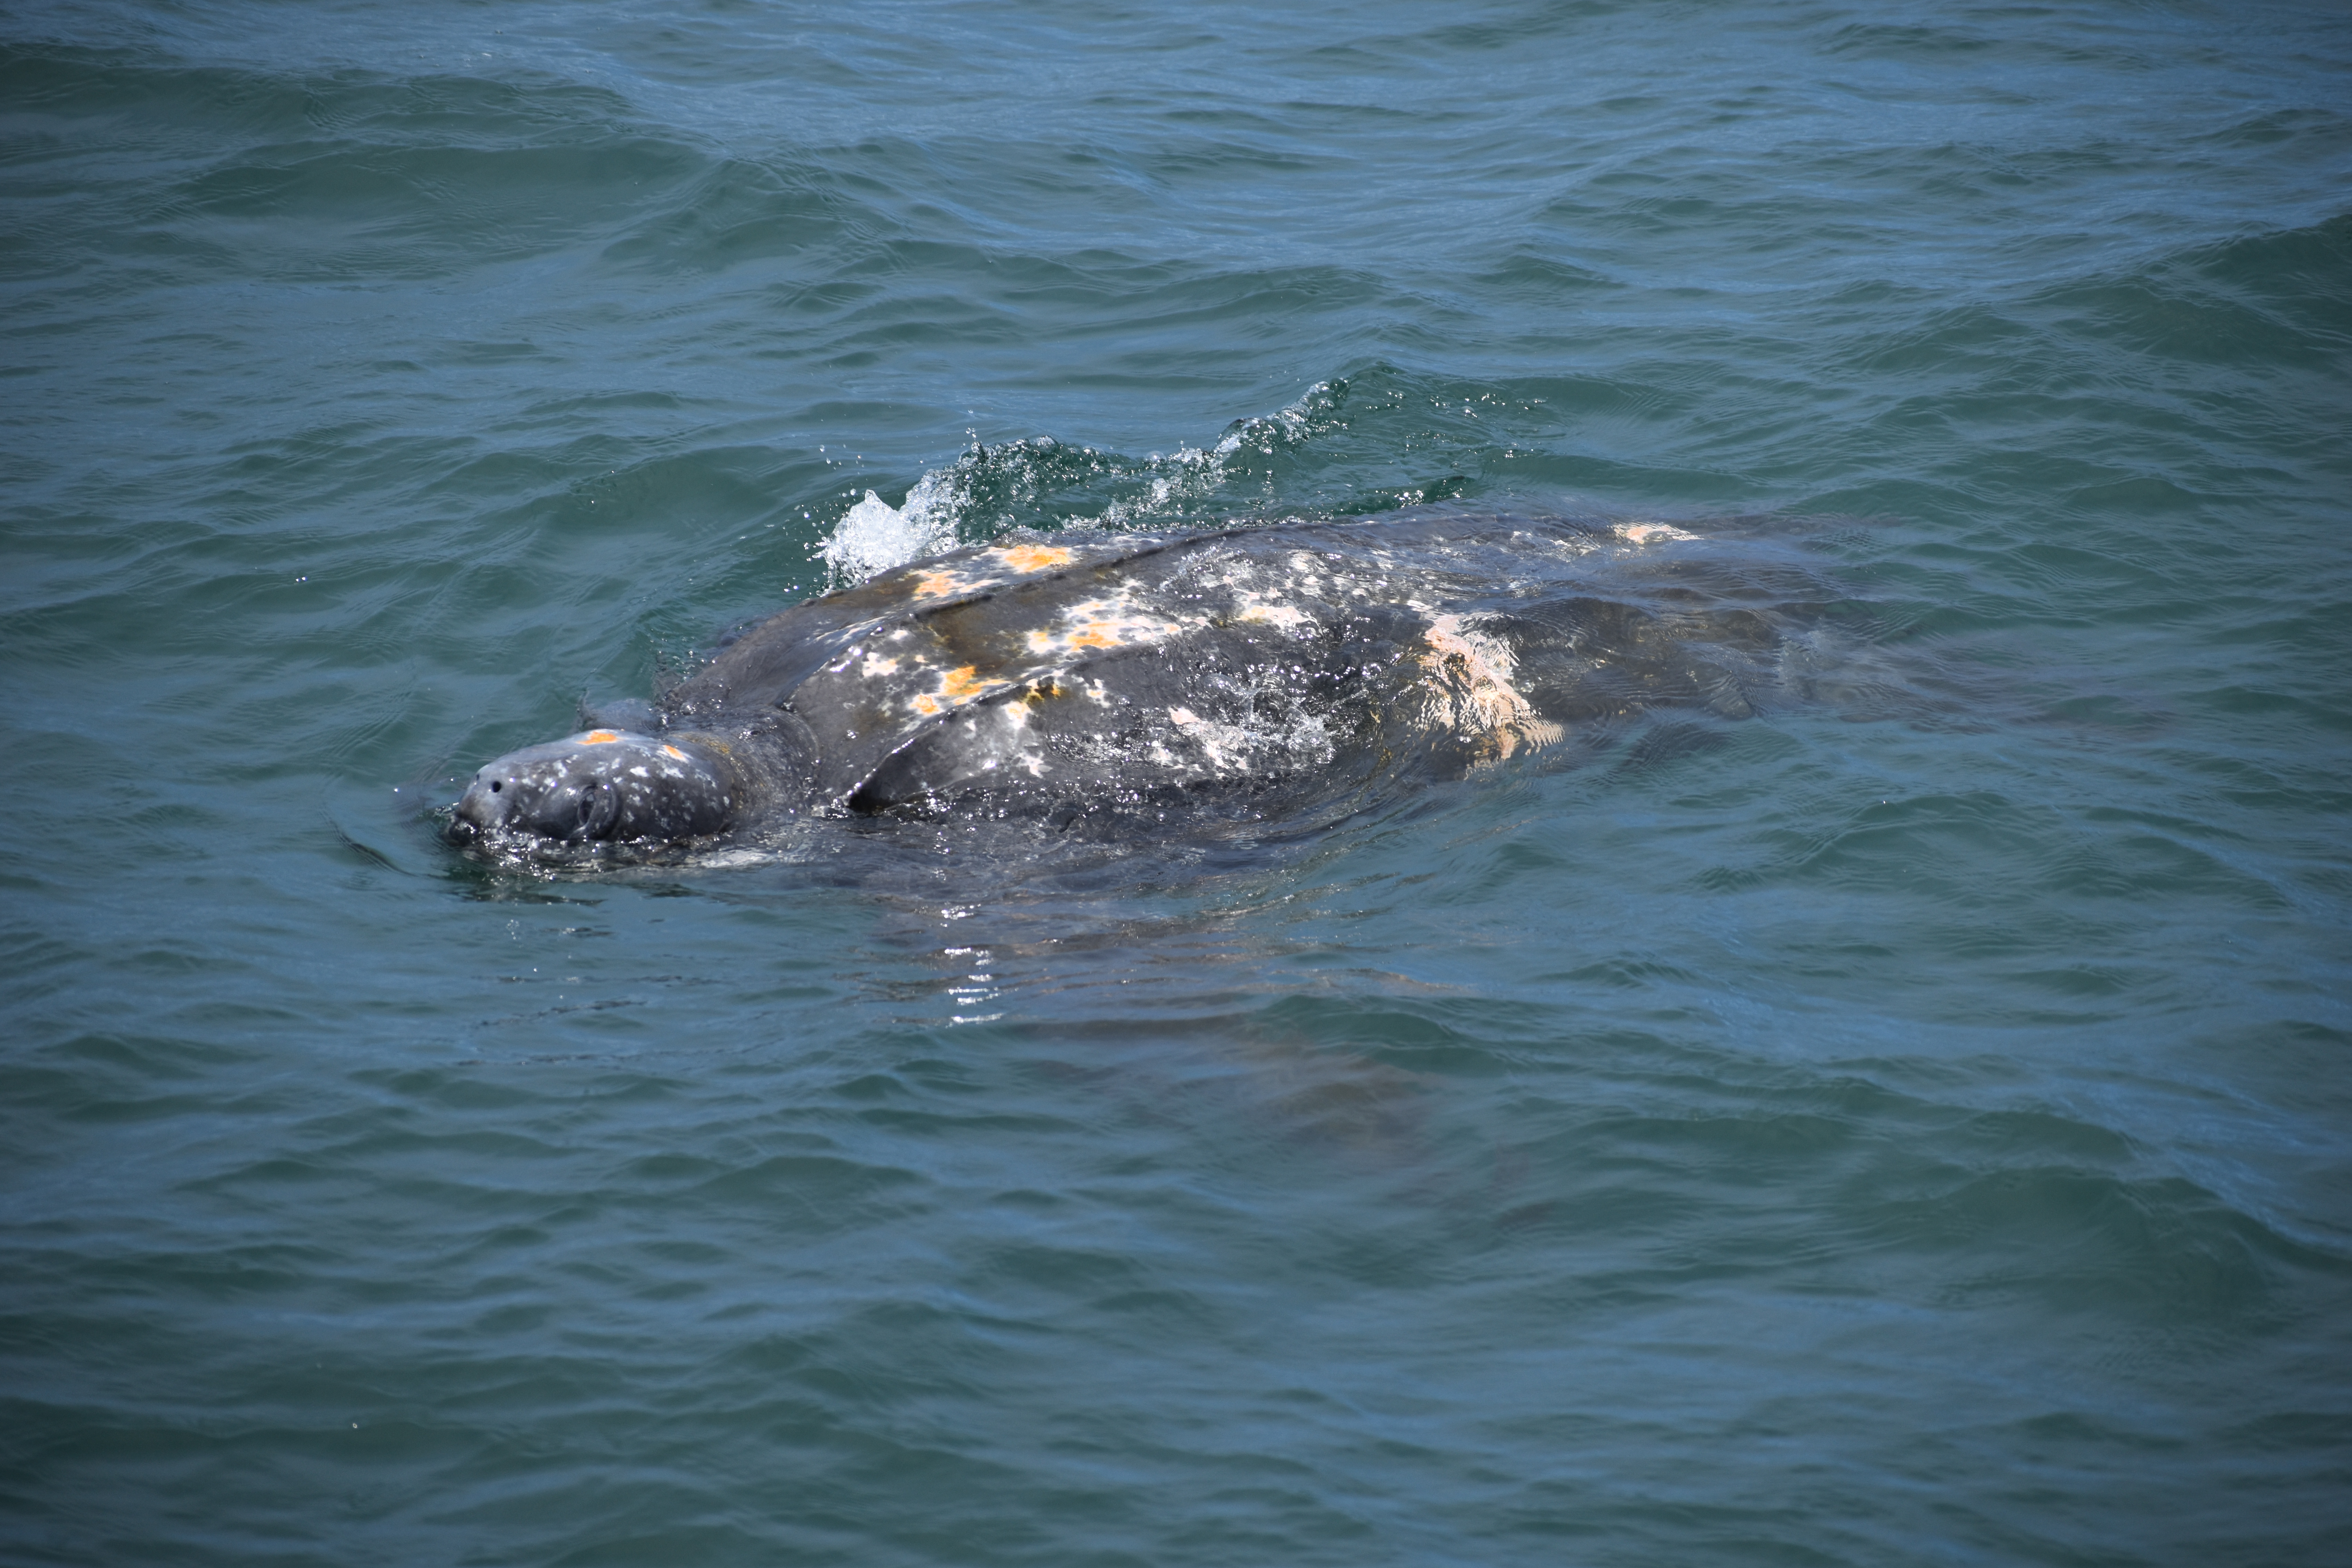 Leatherback sea turtle monterey bay santa cruz july 5 2021